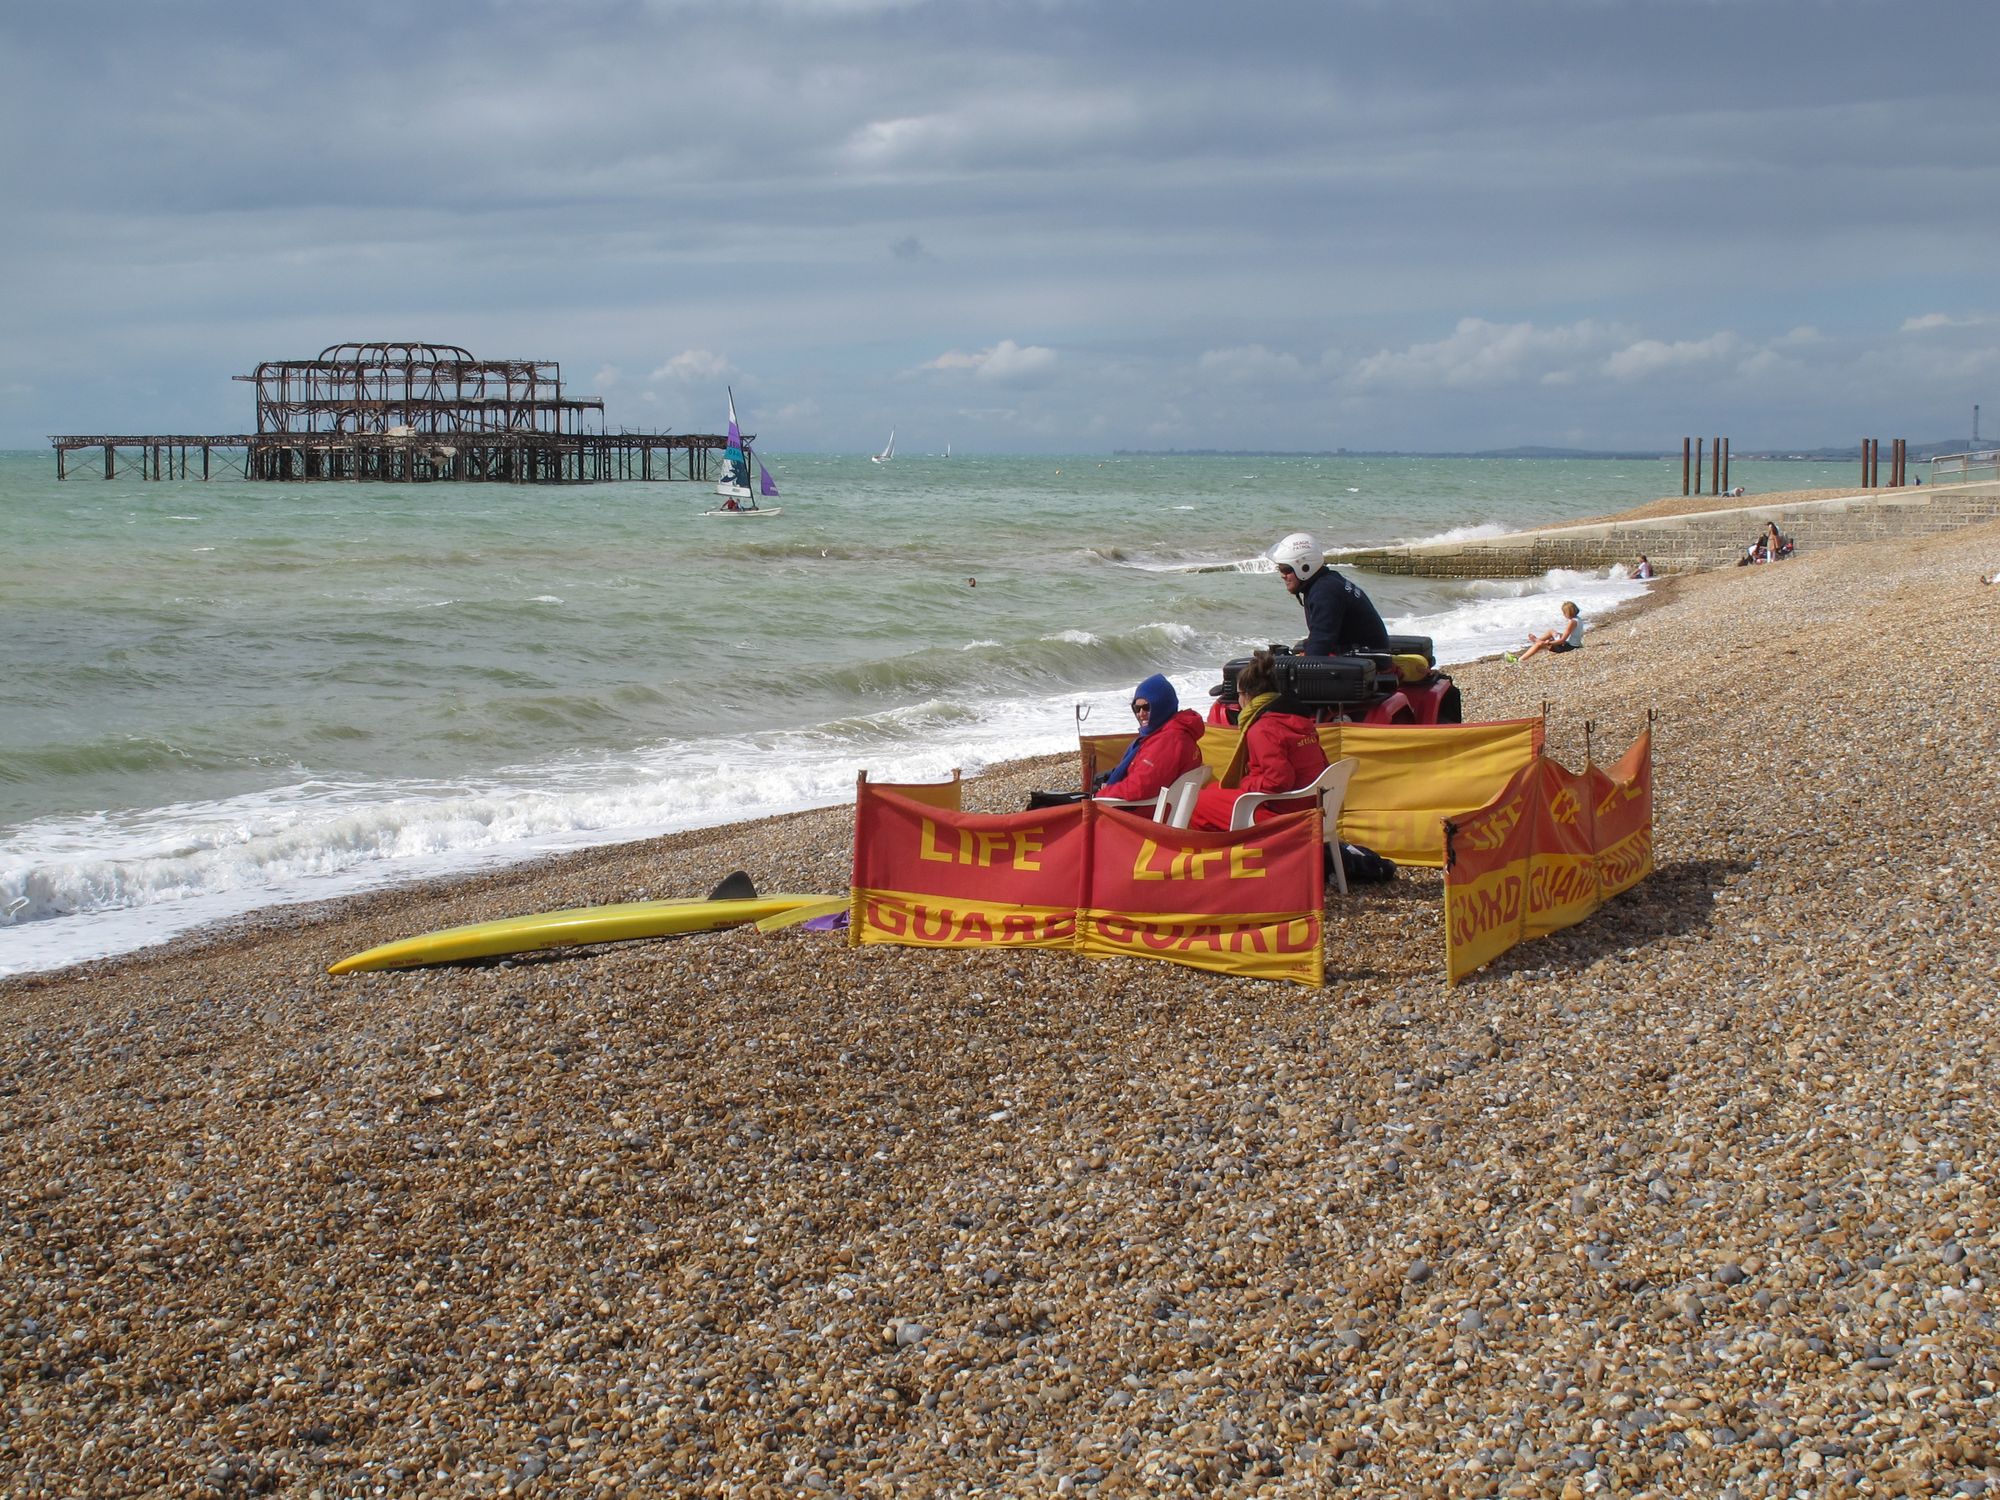 Photograph of lifeguards on Brighton Beach